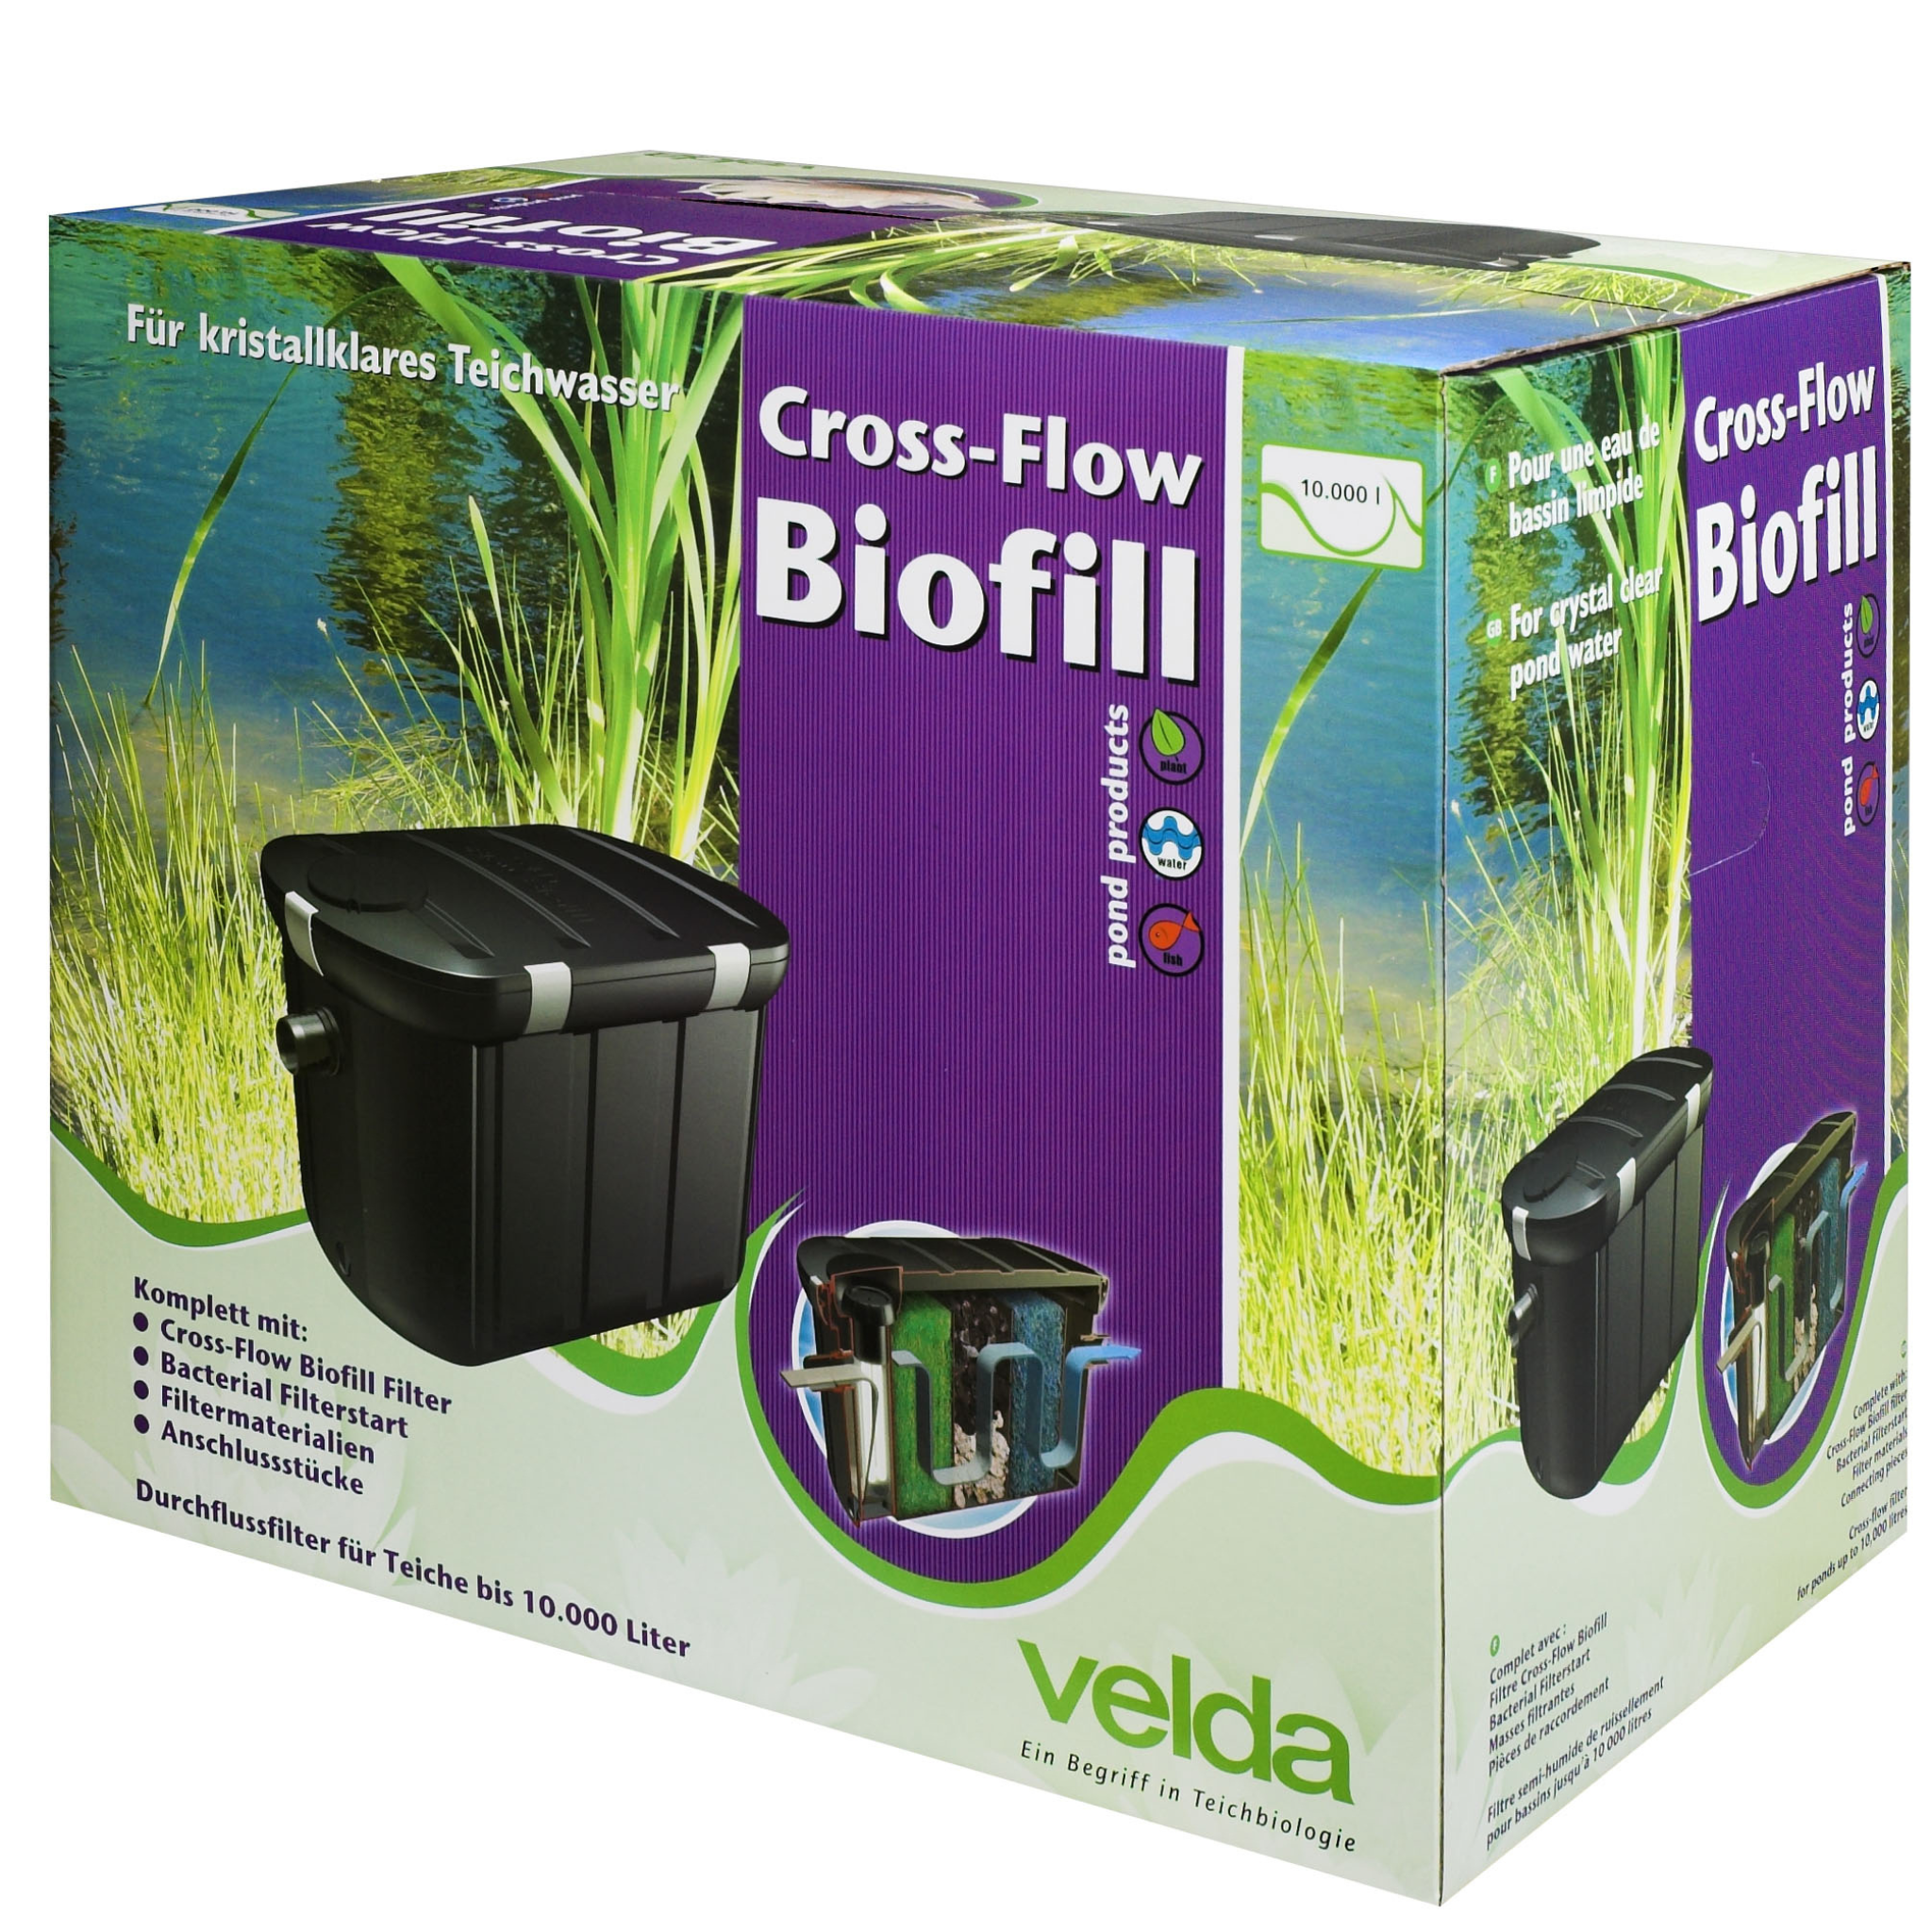 Verpackung Cross-Flow Biofill